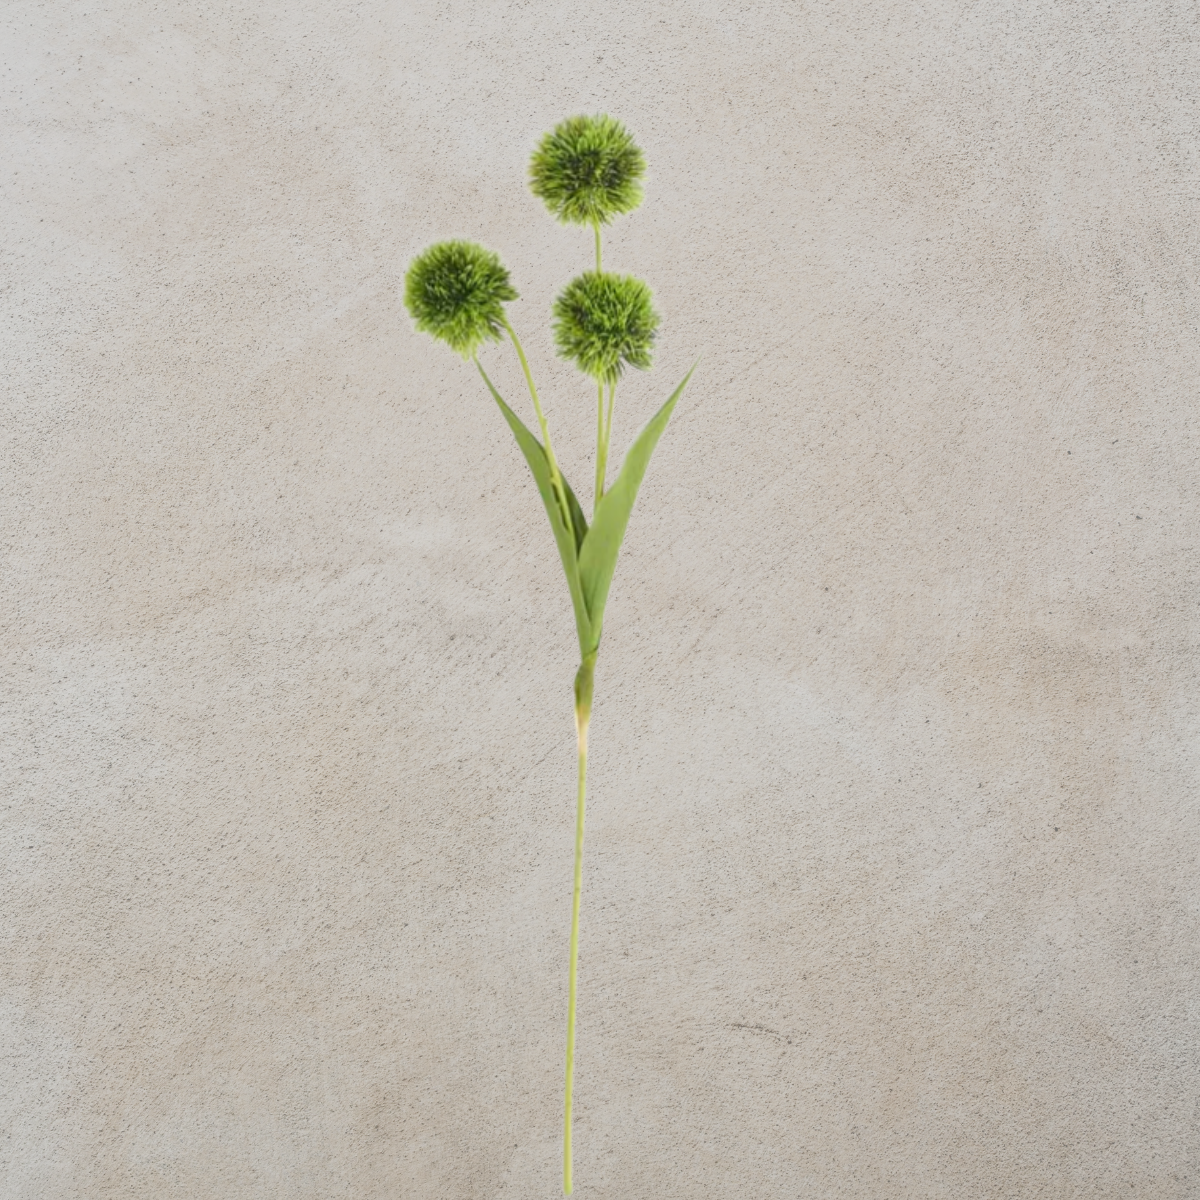 Green Ball Flower Stem